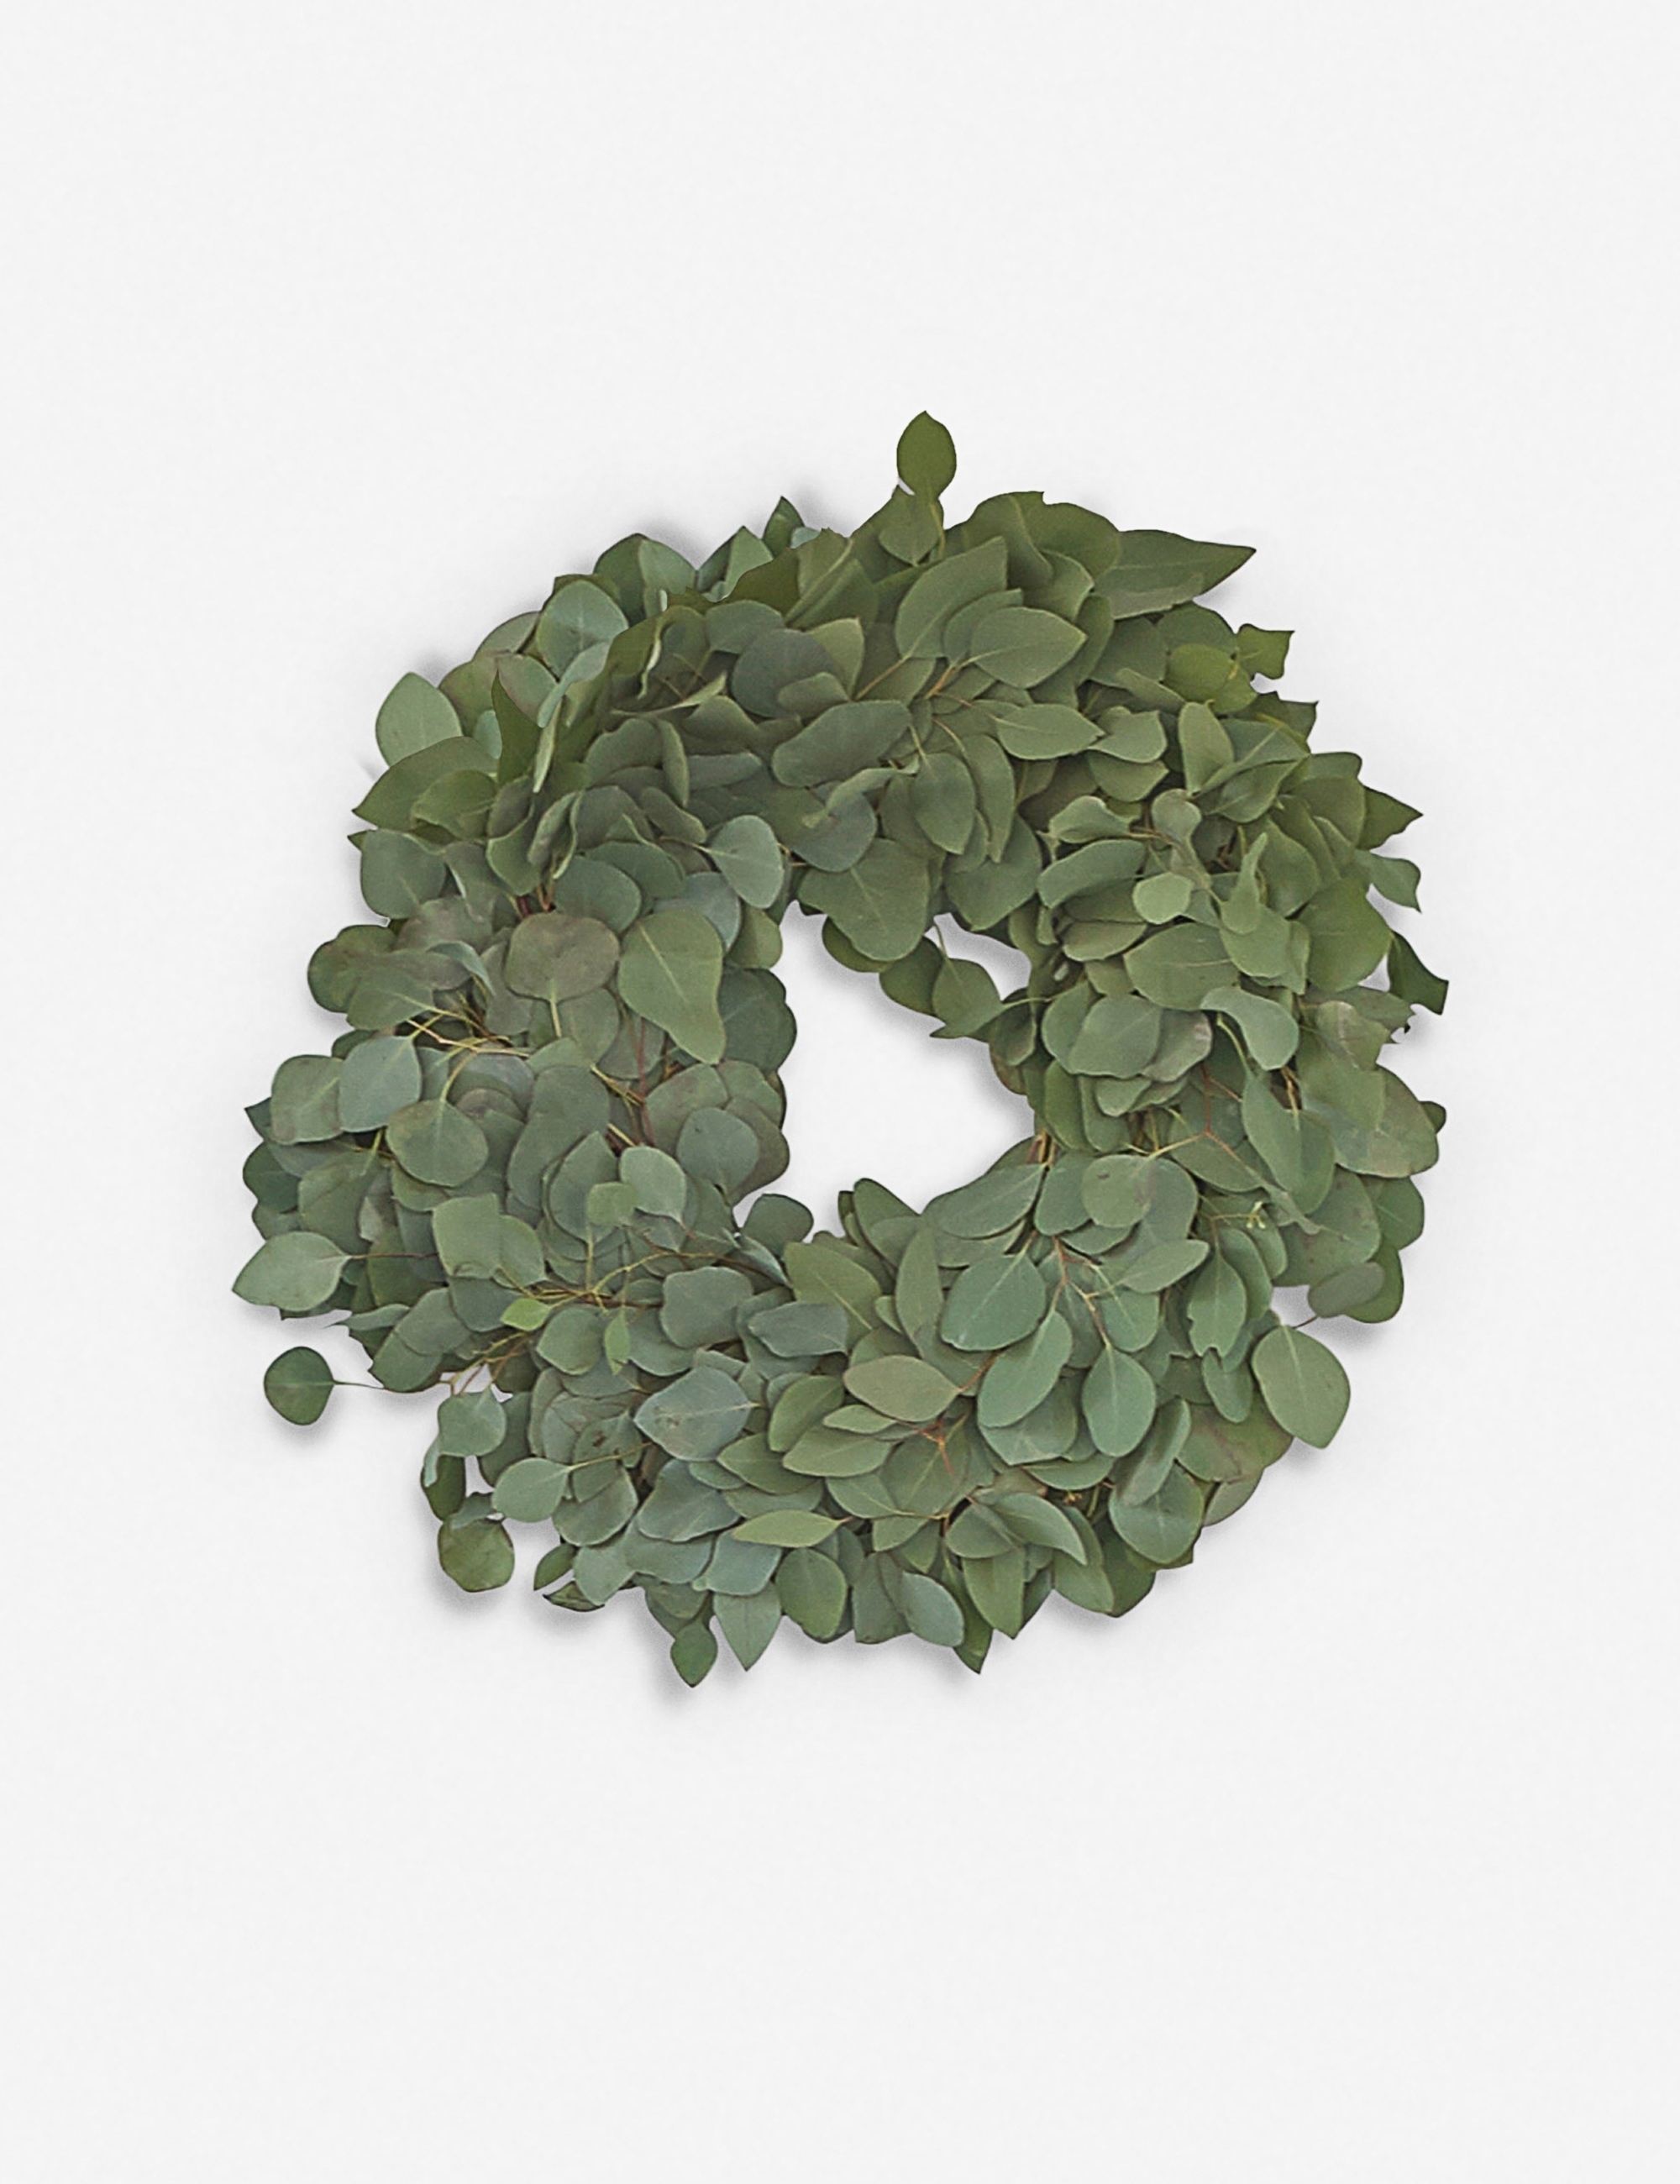 Silver Dollar Eucalyptus Wreath - Image 0